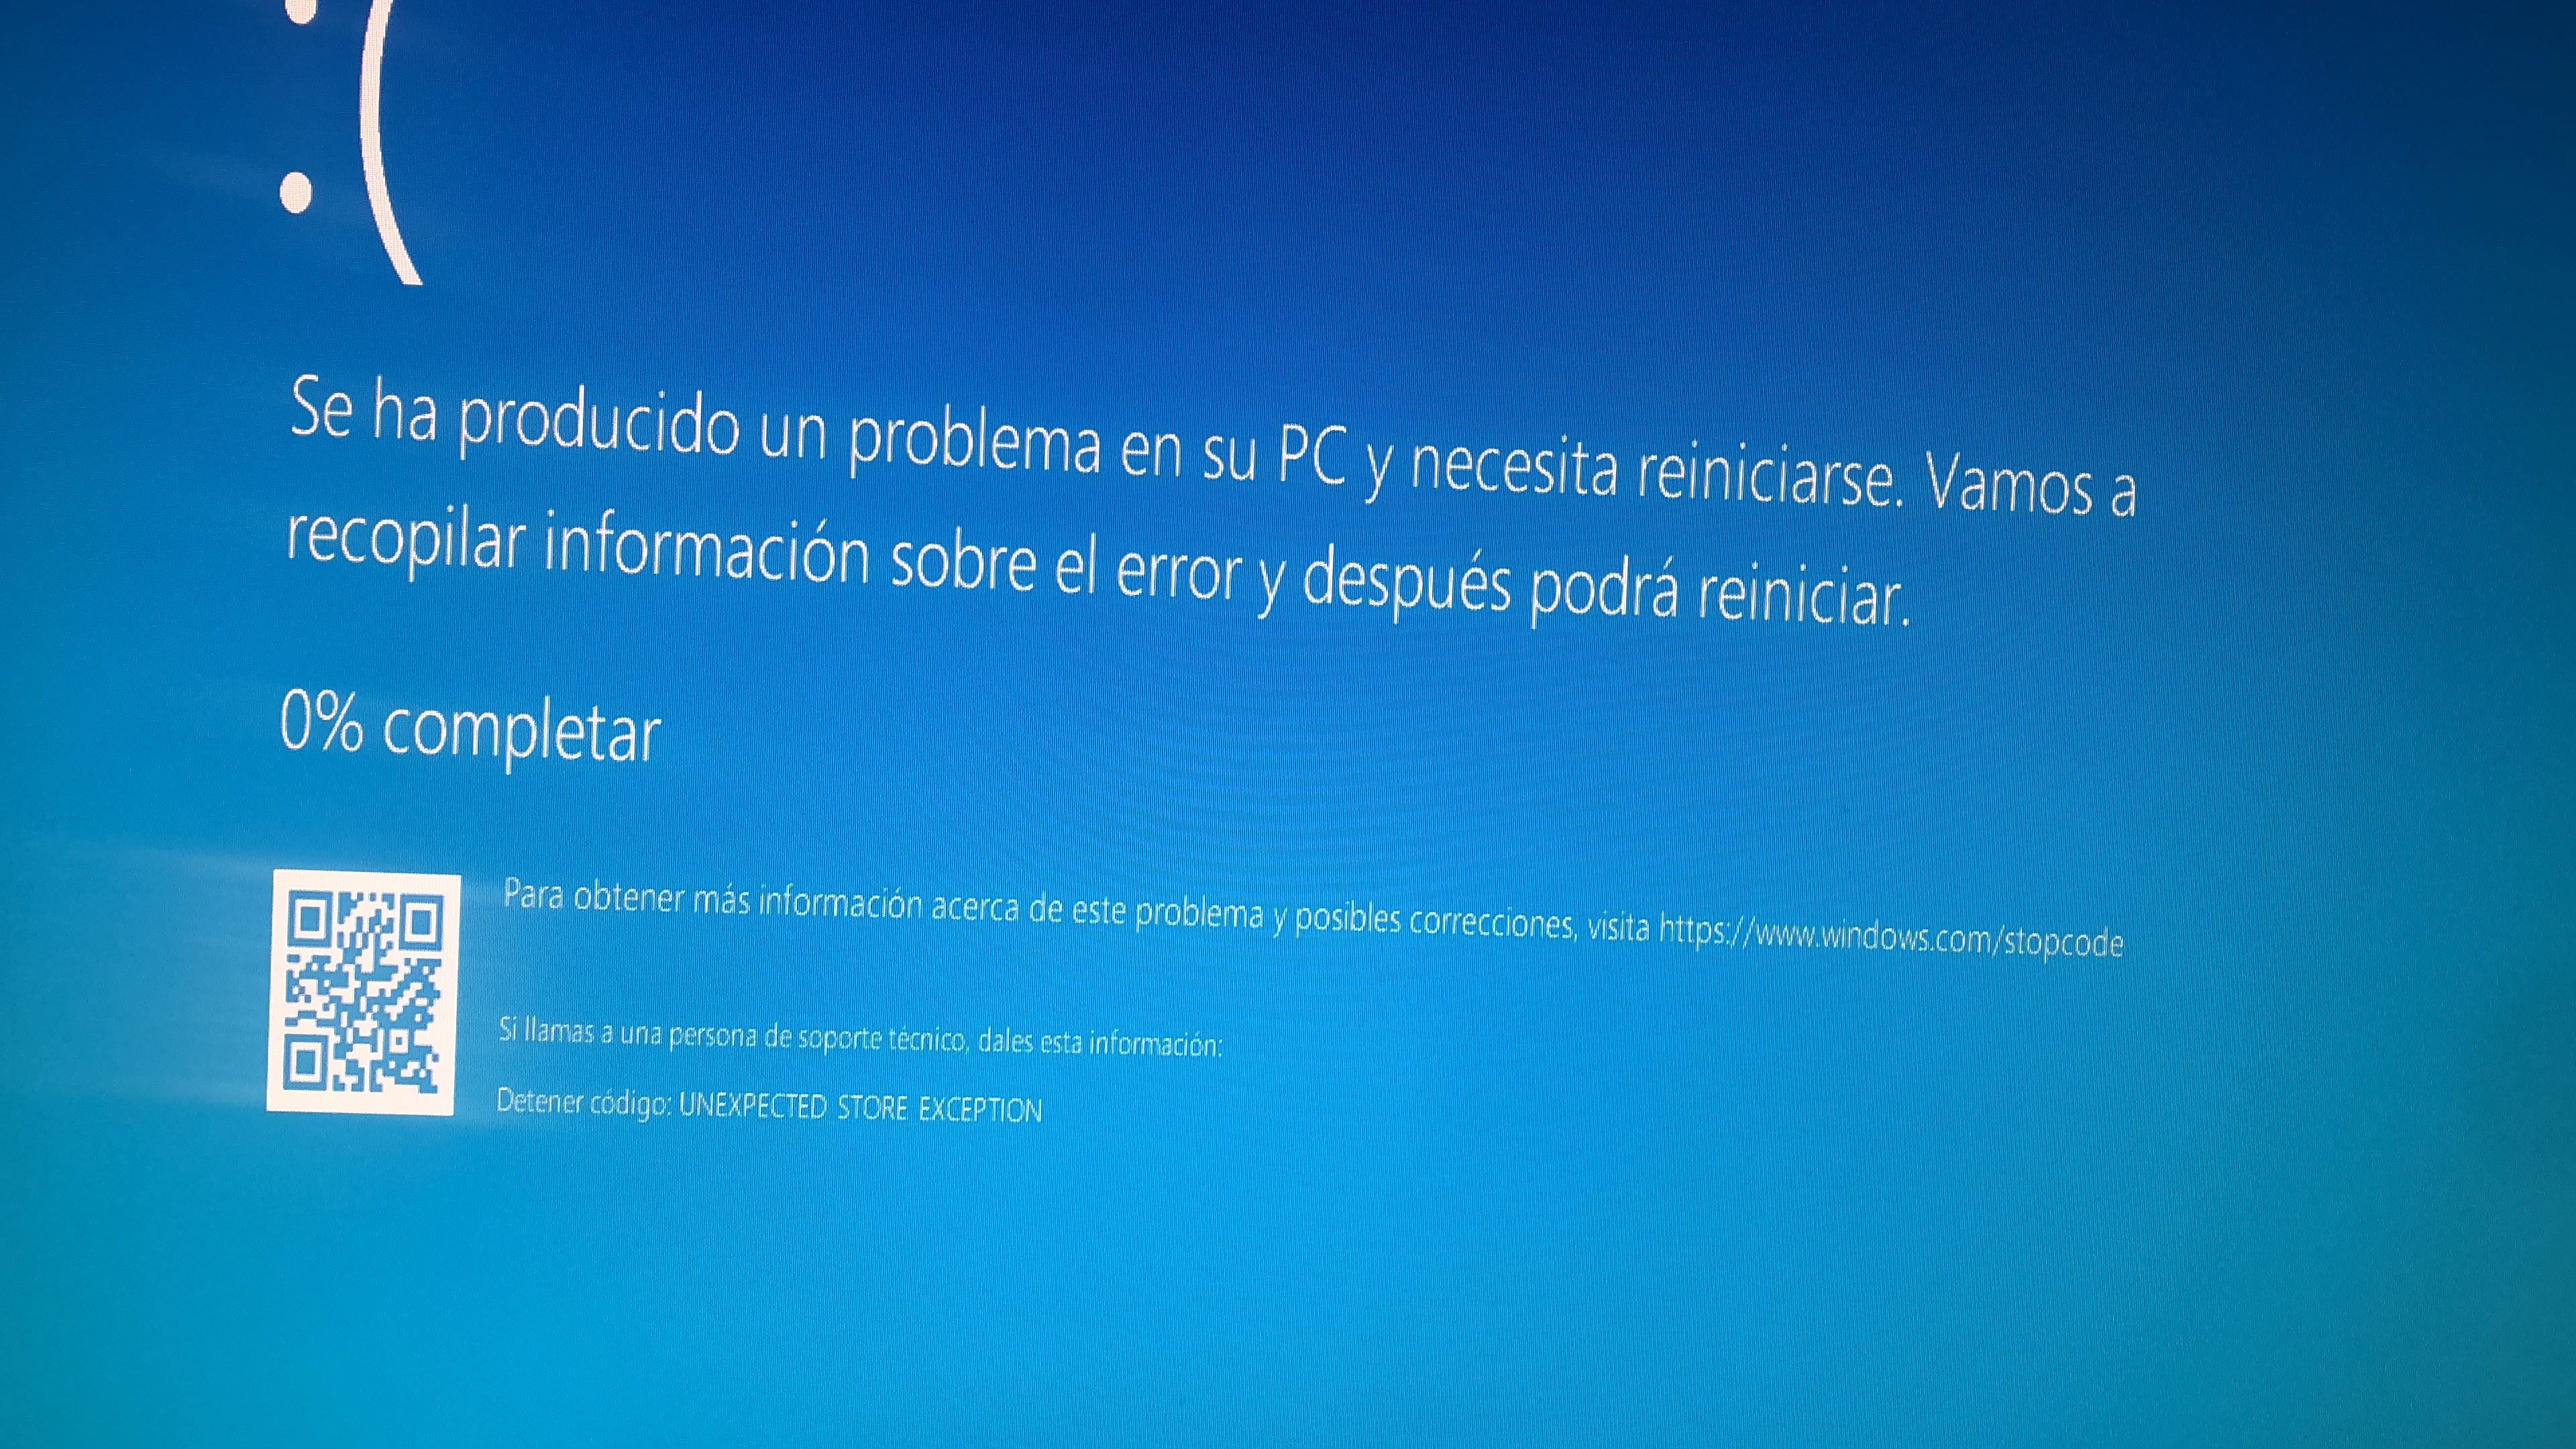 Unexpected internal error. Unexpected Store exception Windows 10.